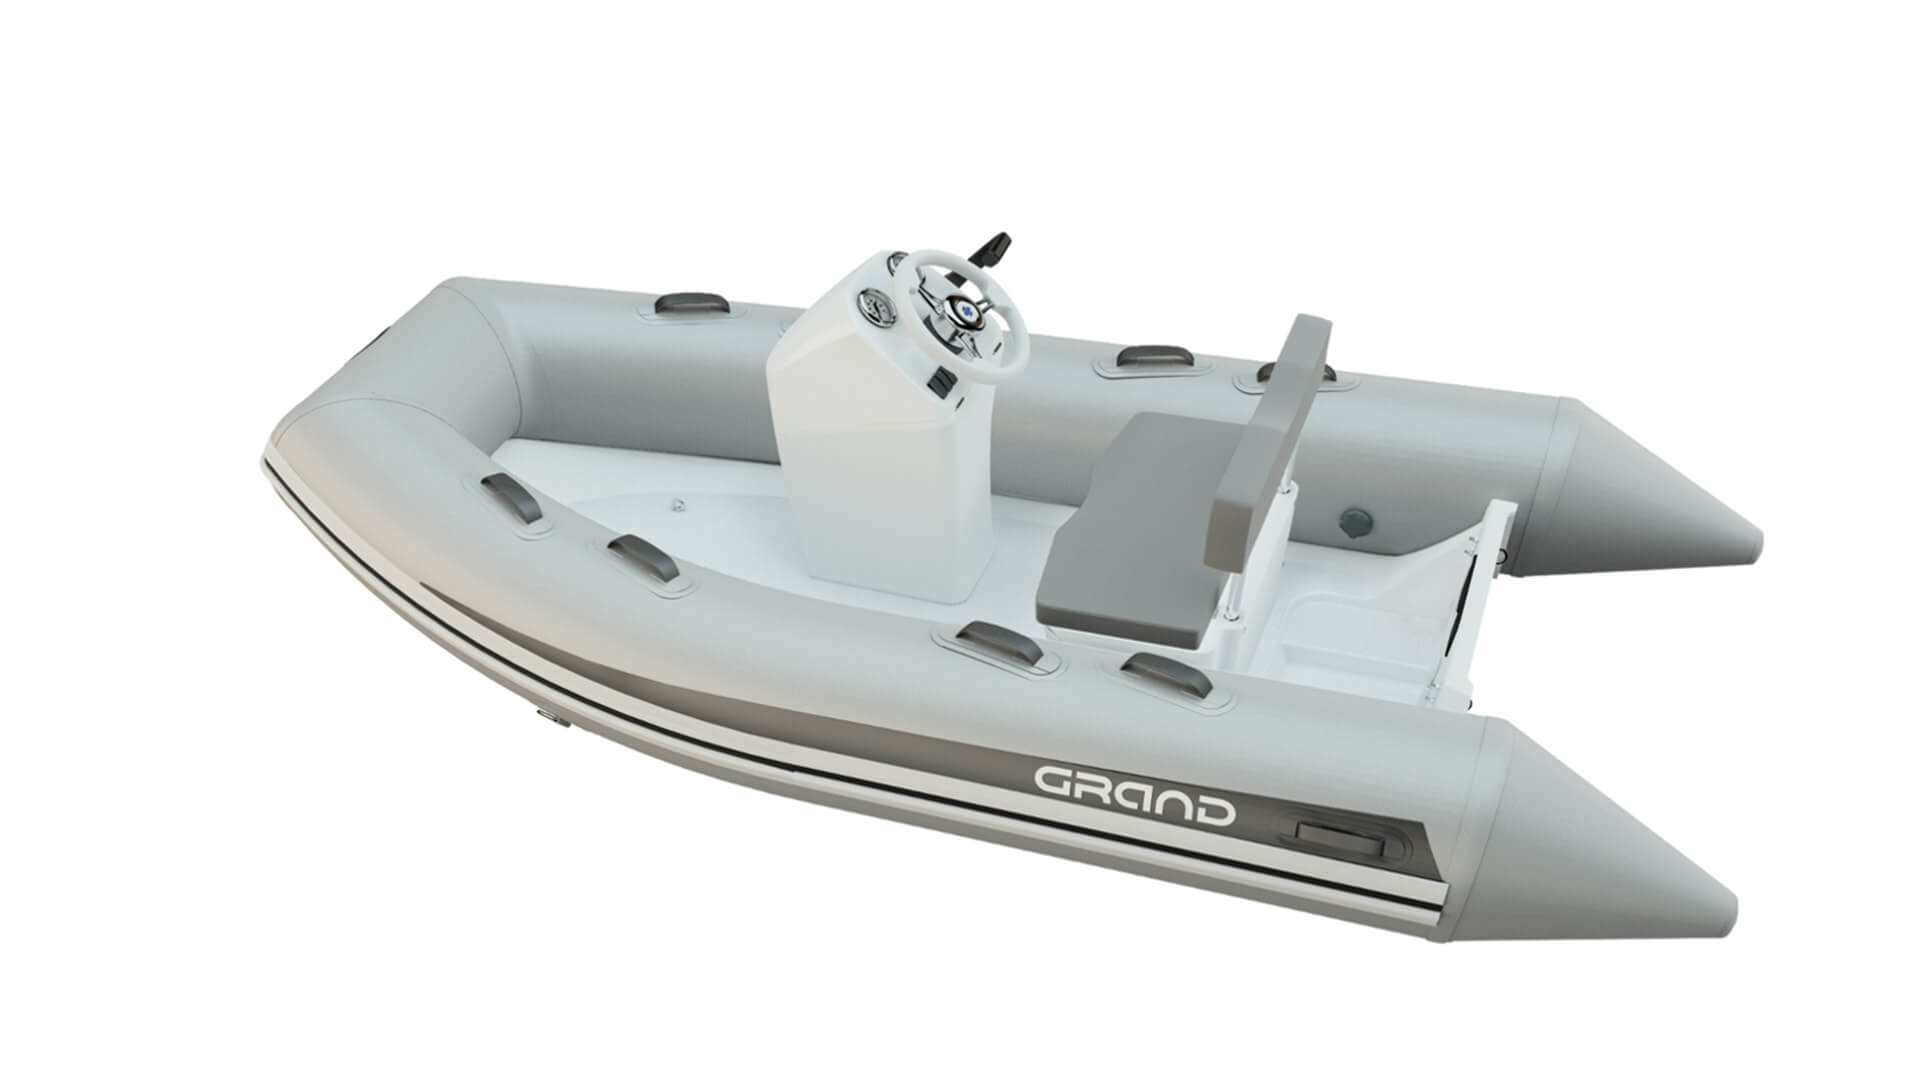 GRAND Silver Line S330L, GRAND S330L, S3330NL, GRAND Silver Line S330L, GRAND Silver Line S330L, GRAND S330L, GRAND S330L, S330L, S330L, Надувная лодка GRAND, Надувная лодка ГРАНД, Надувная лодка с жестким дном, RIB, Rigid Inflatable Boats